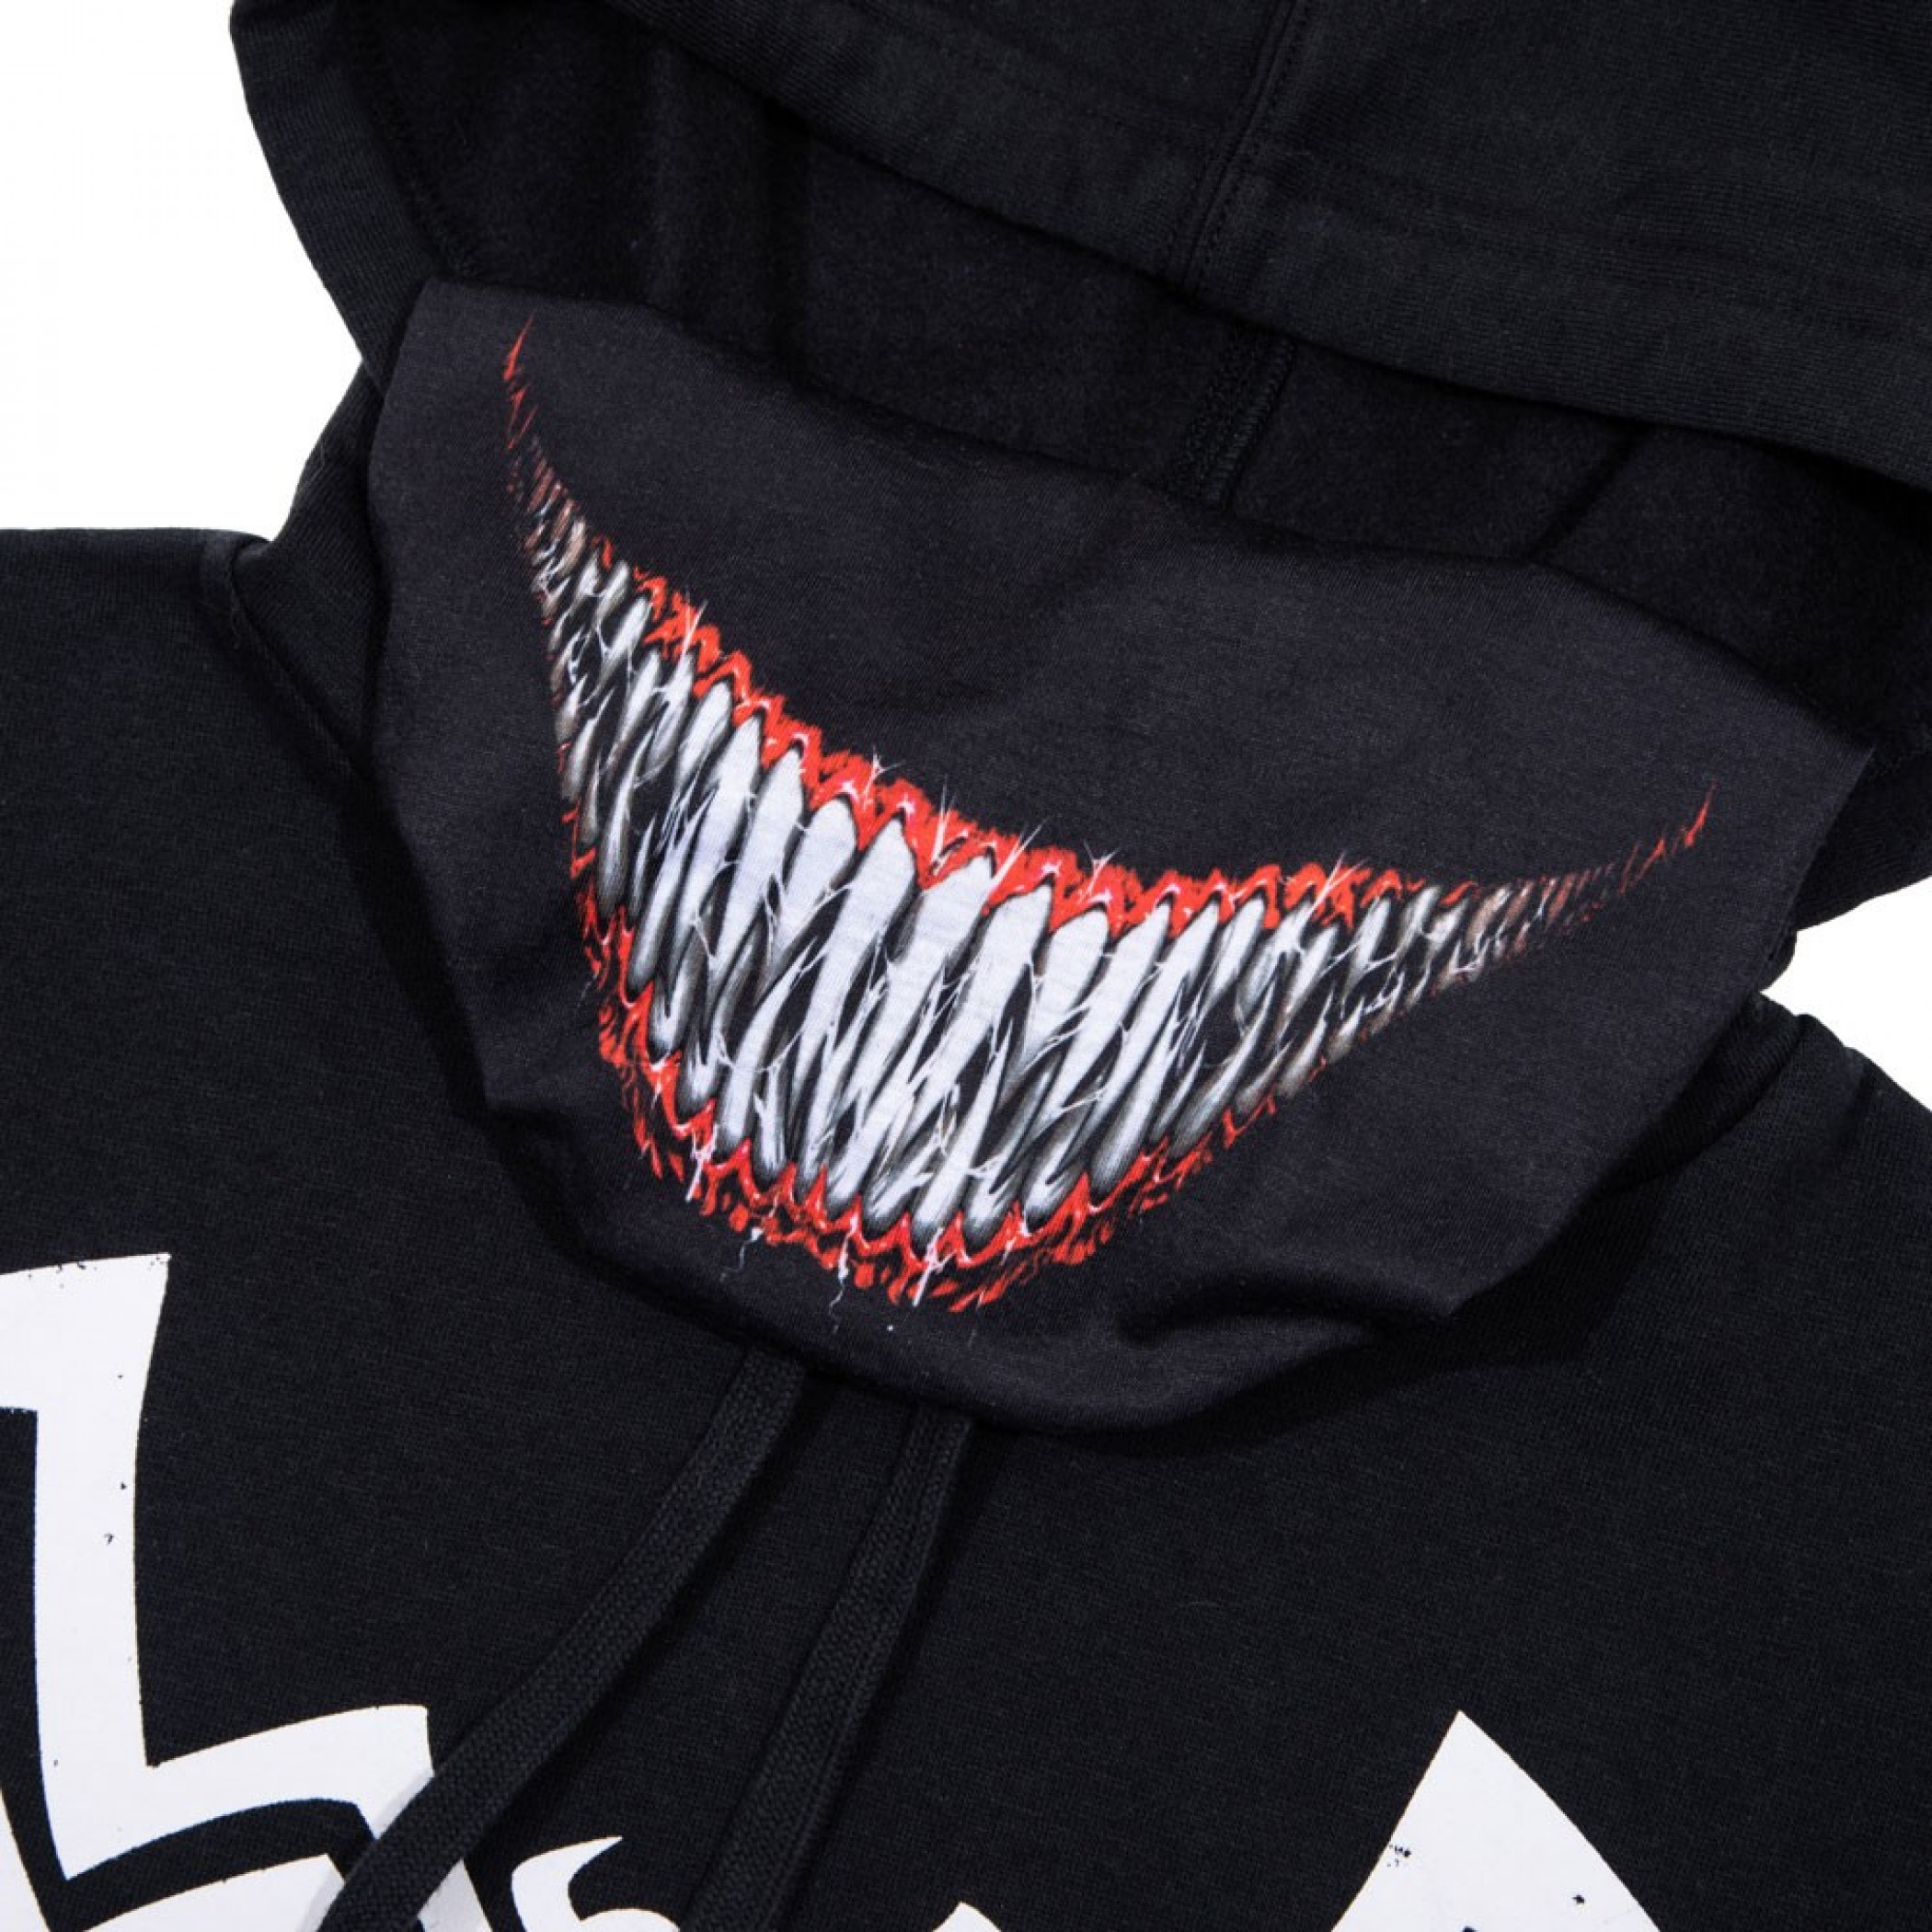 Marvel Venom Symbol Hoodie with Built-in Smile Face Mask Gaiter